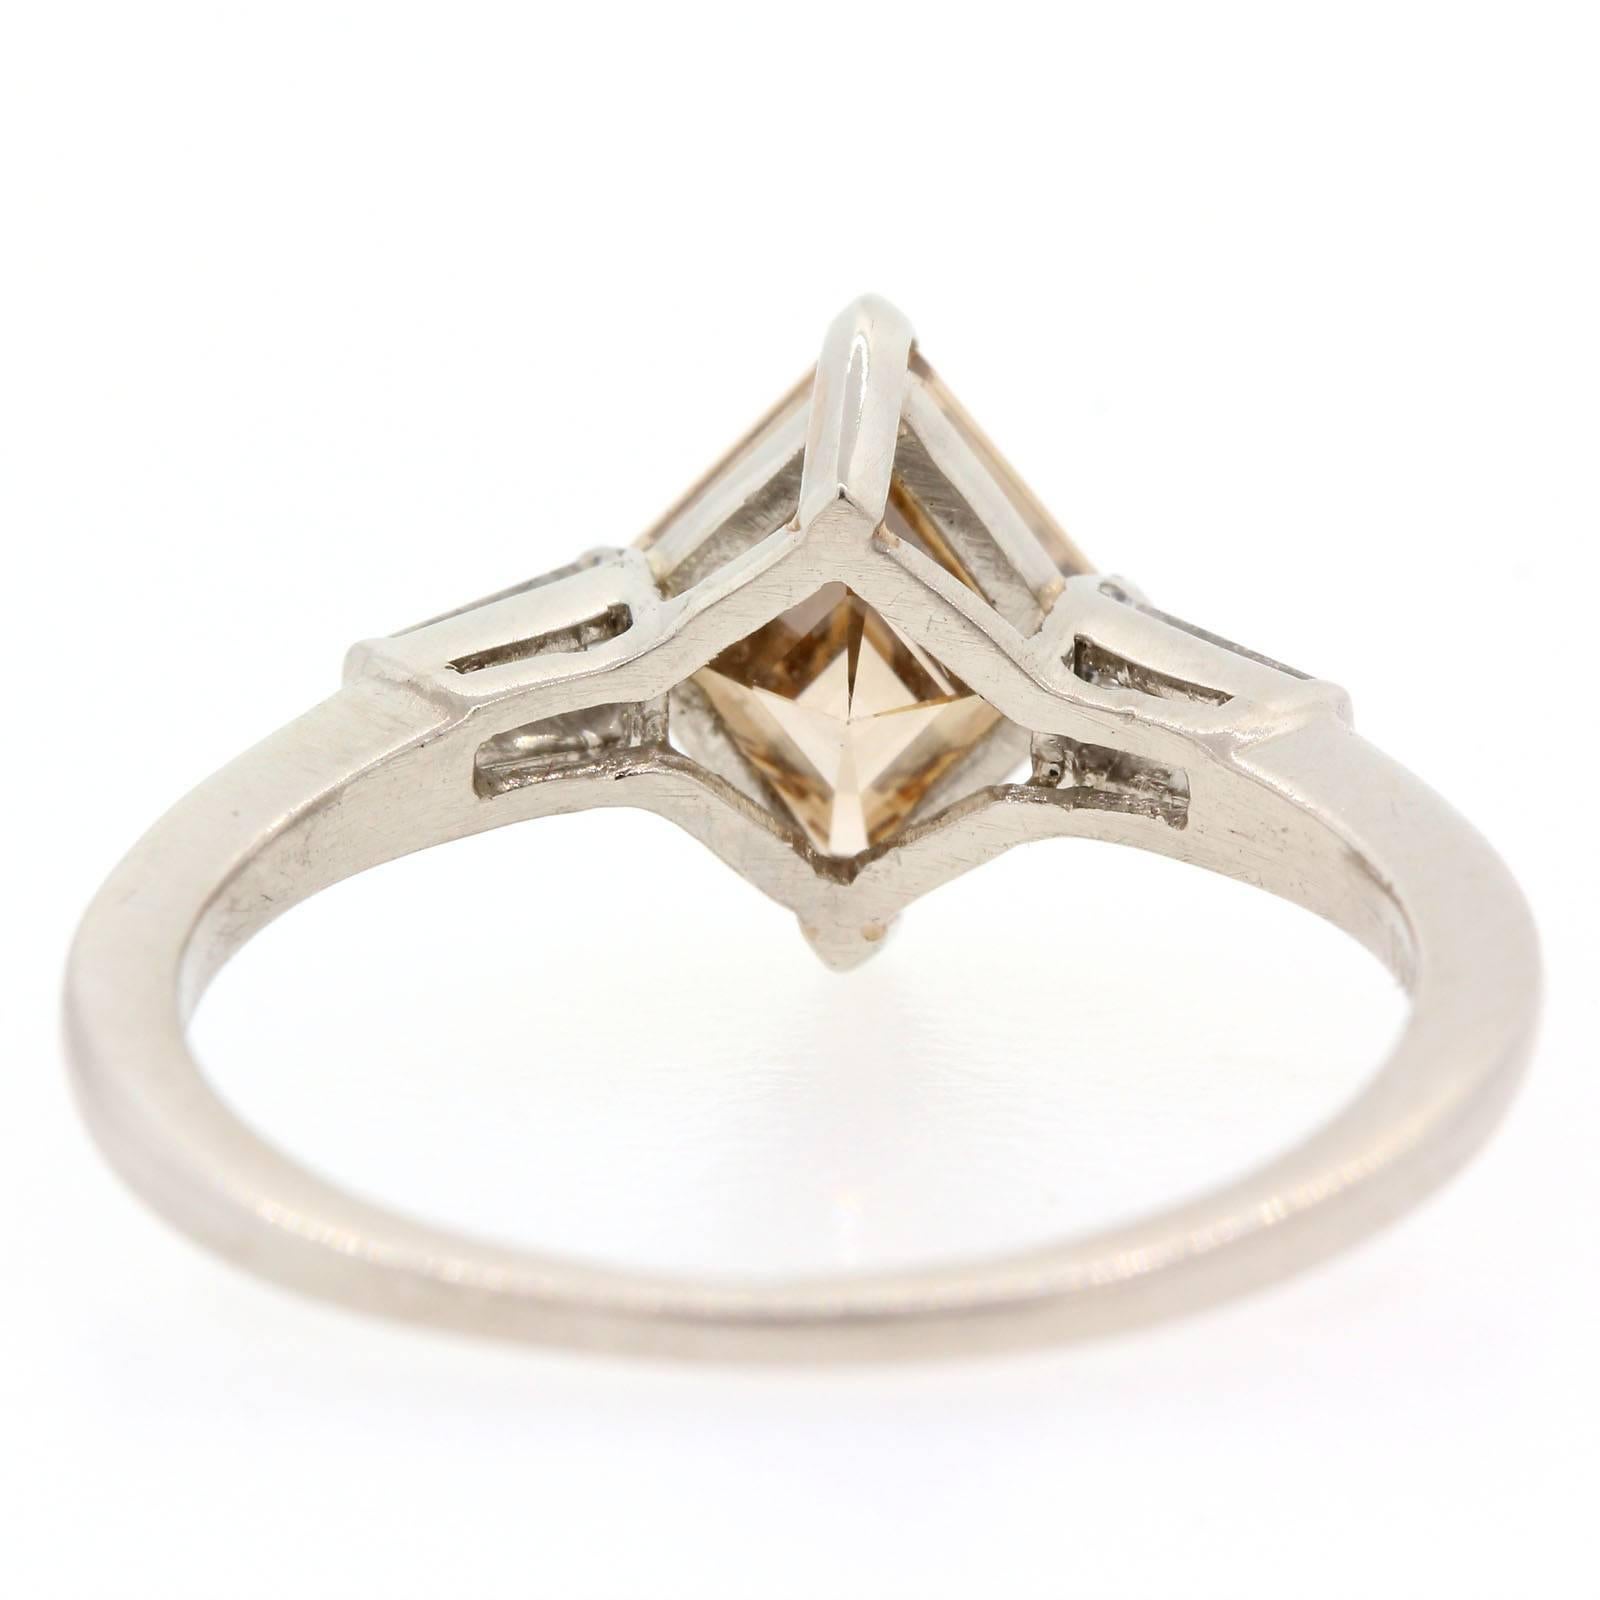 Unique 1940s diamond shape Cut Diamond certified E.G.L. Fancy Brown - VVS2 clarity.  The platinum setting is accented with two Baguette Cut Diamonds of H/I color - VS clarity.  The vintage ring is ring size 6.  An Enviable Ring!